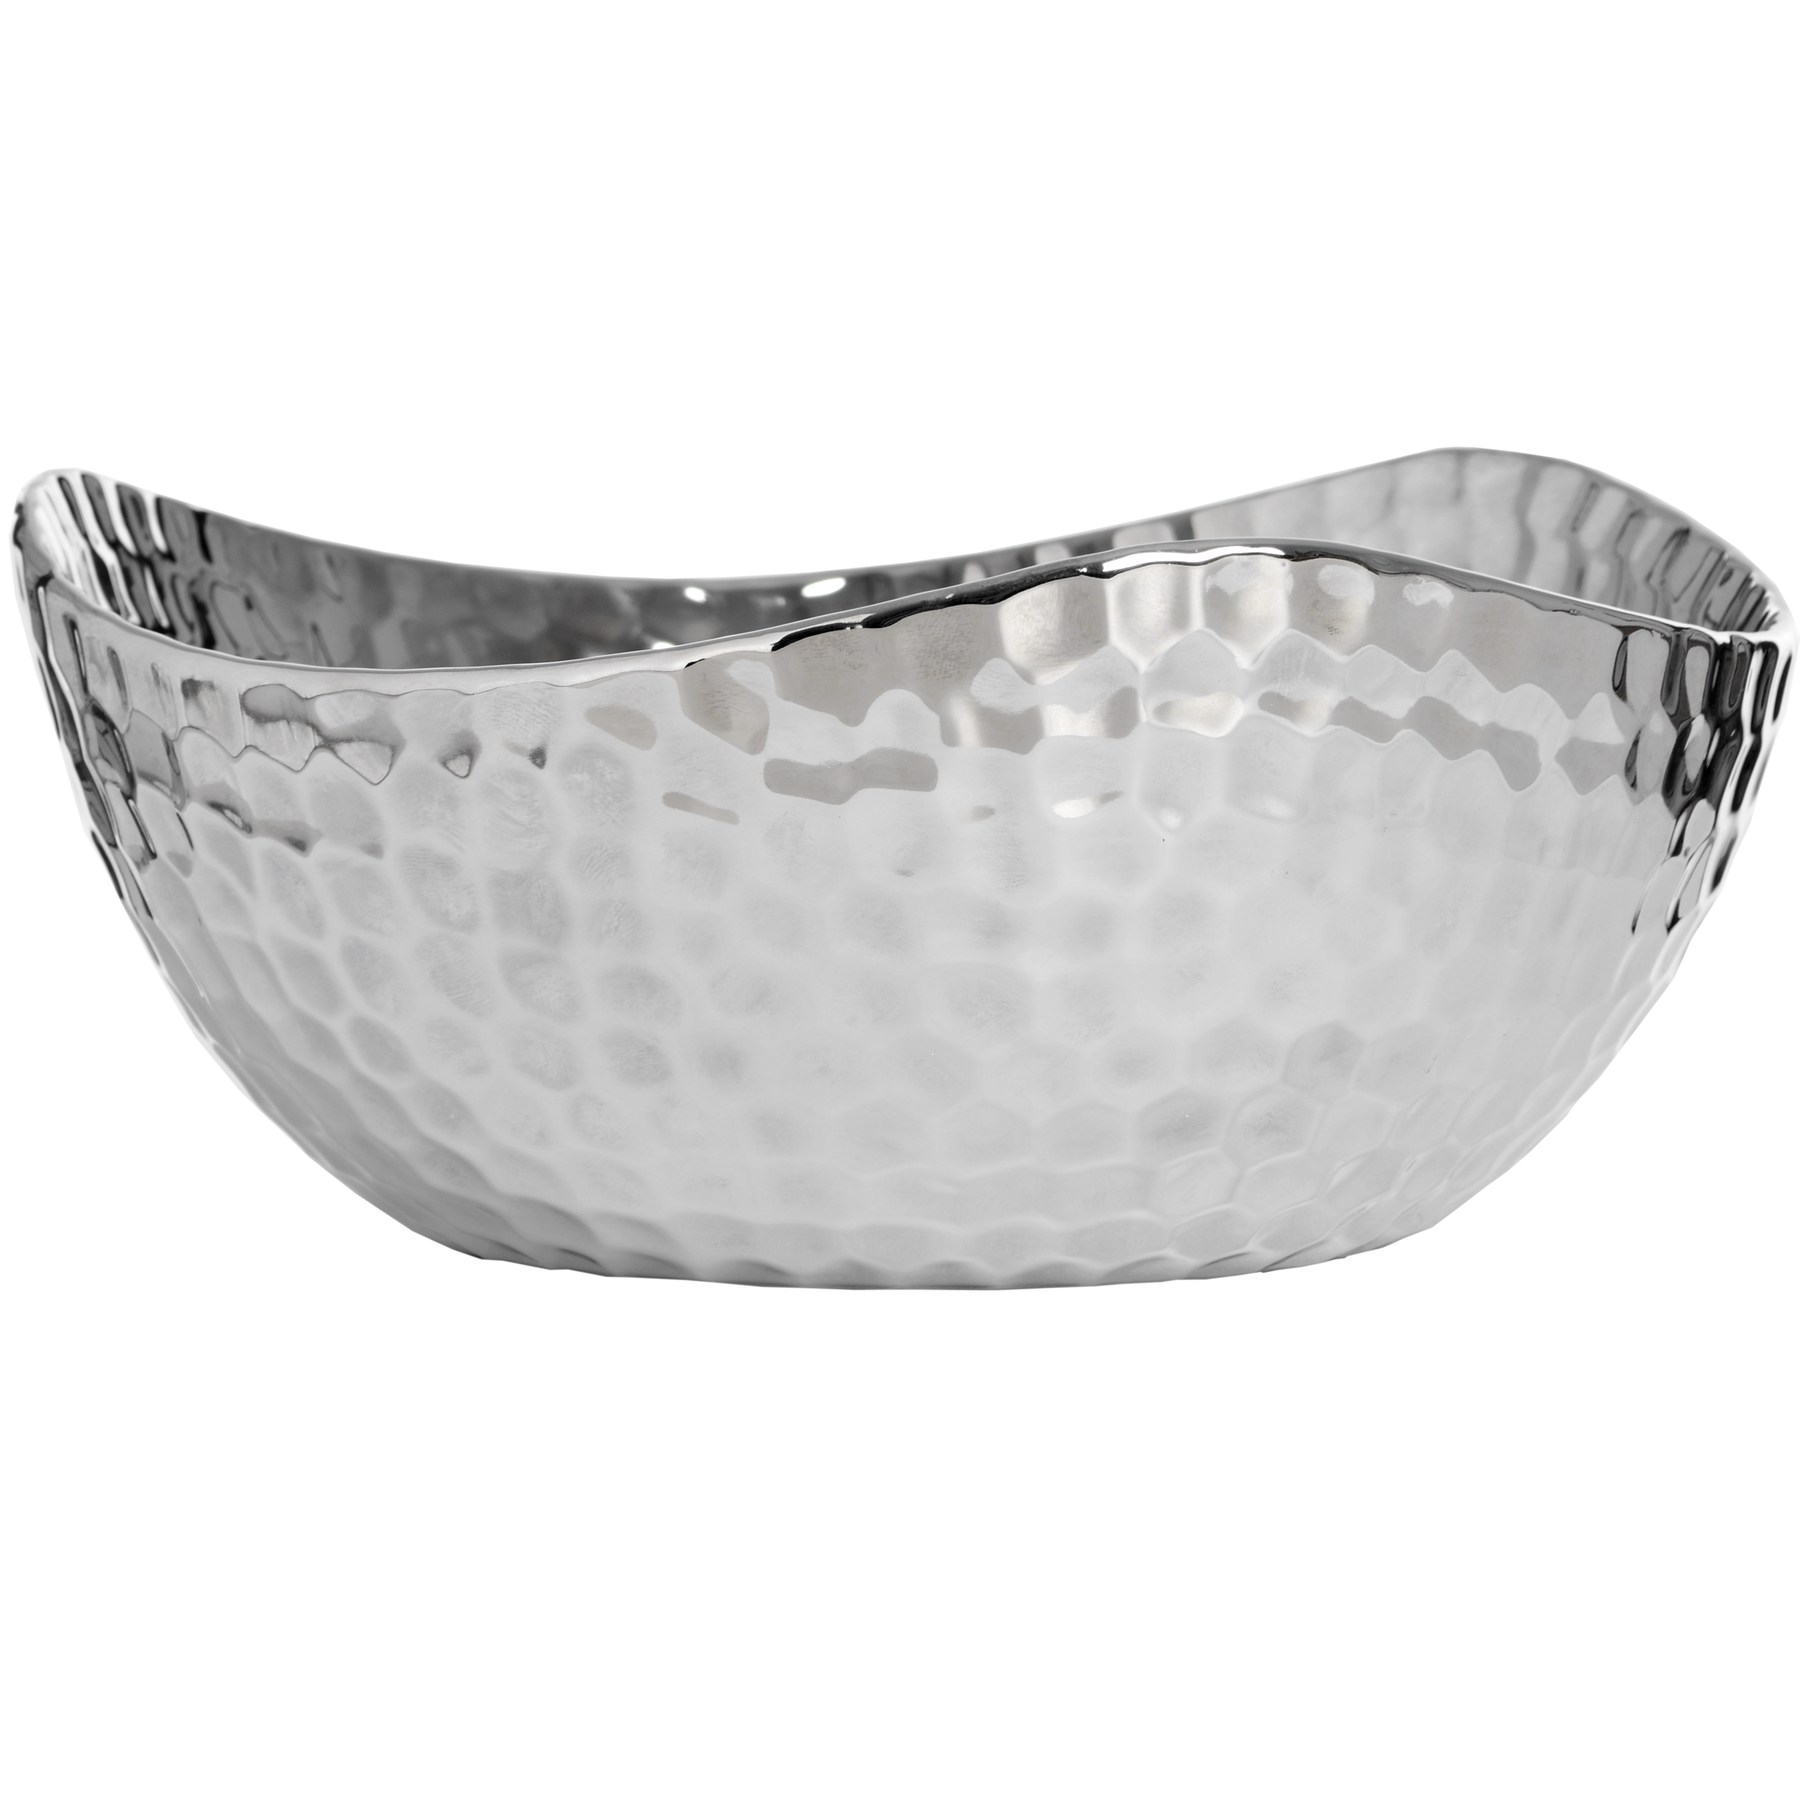 Silver Ceramic Dimple Effect Display Bowl - Image 3